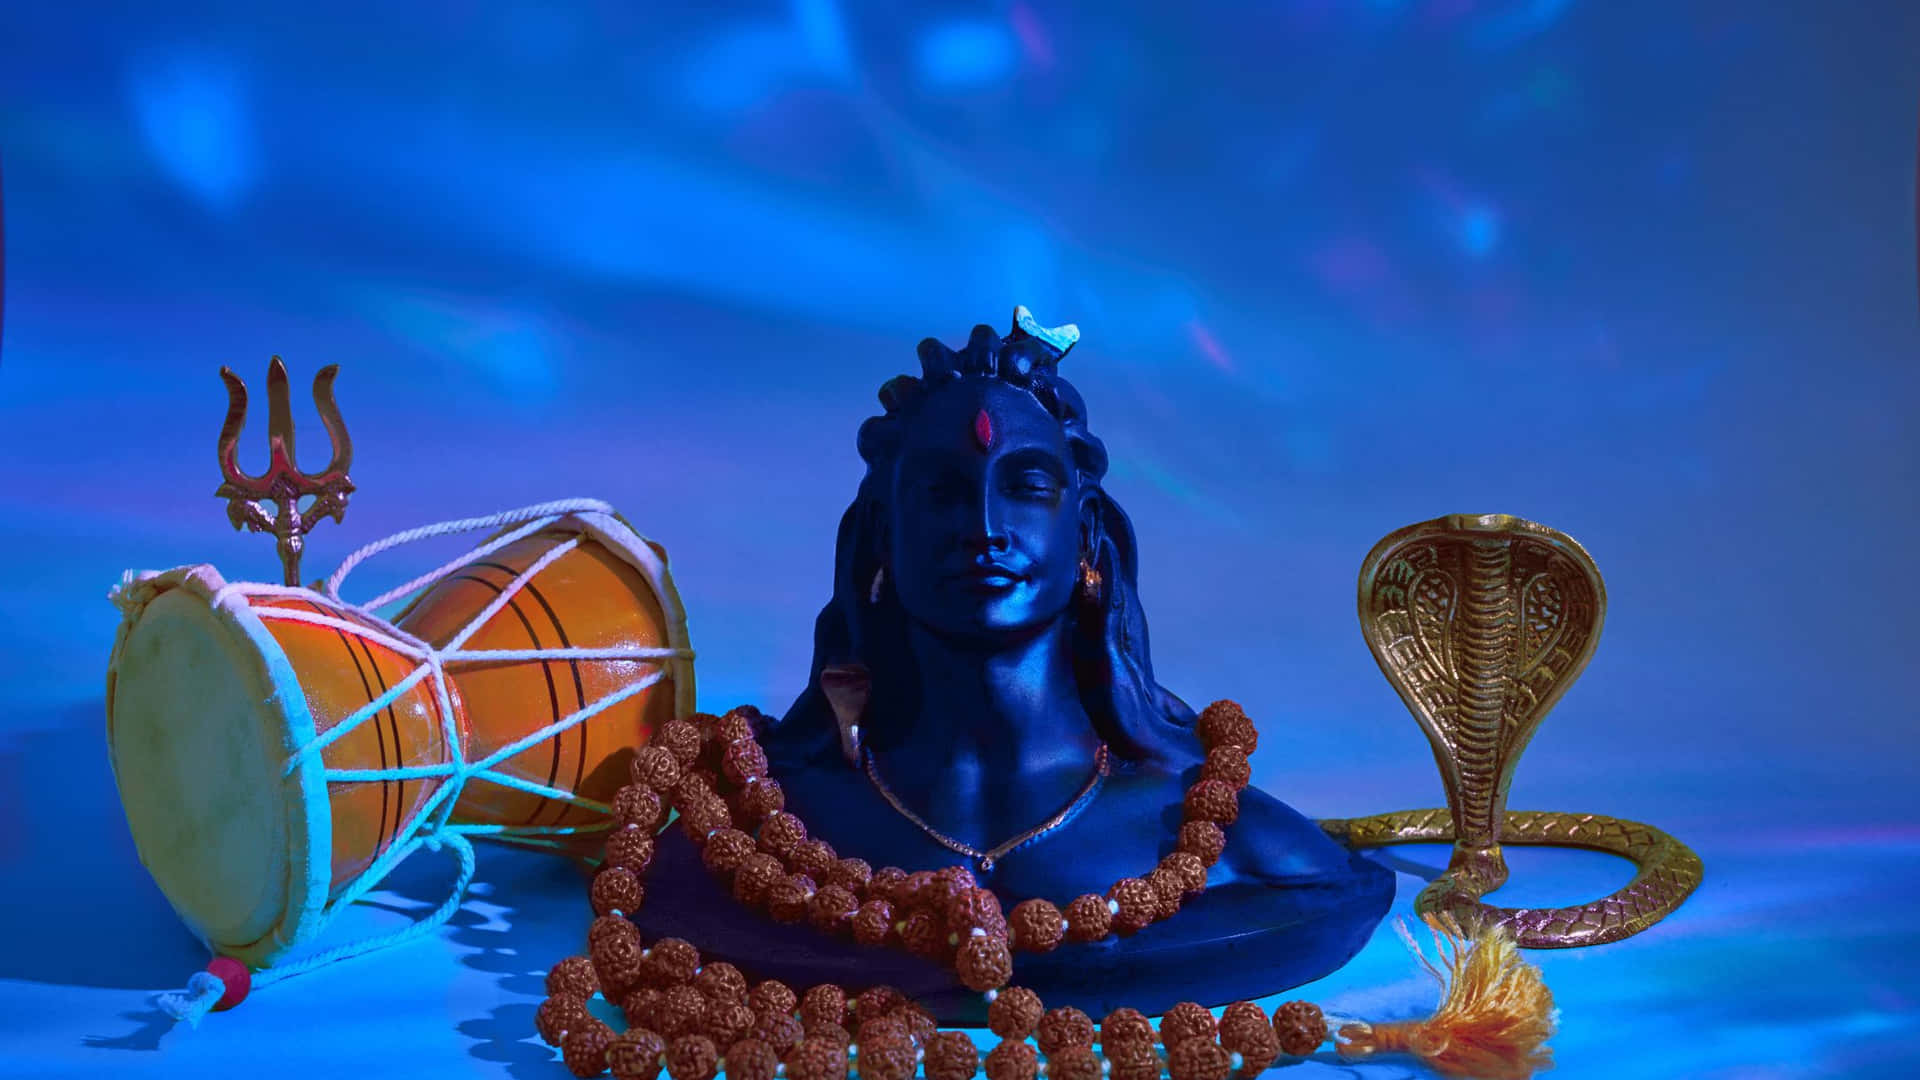 Lord Shiva in all Glory